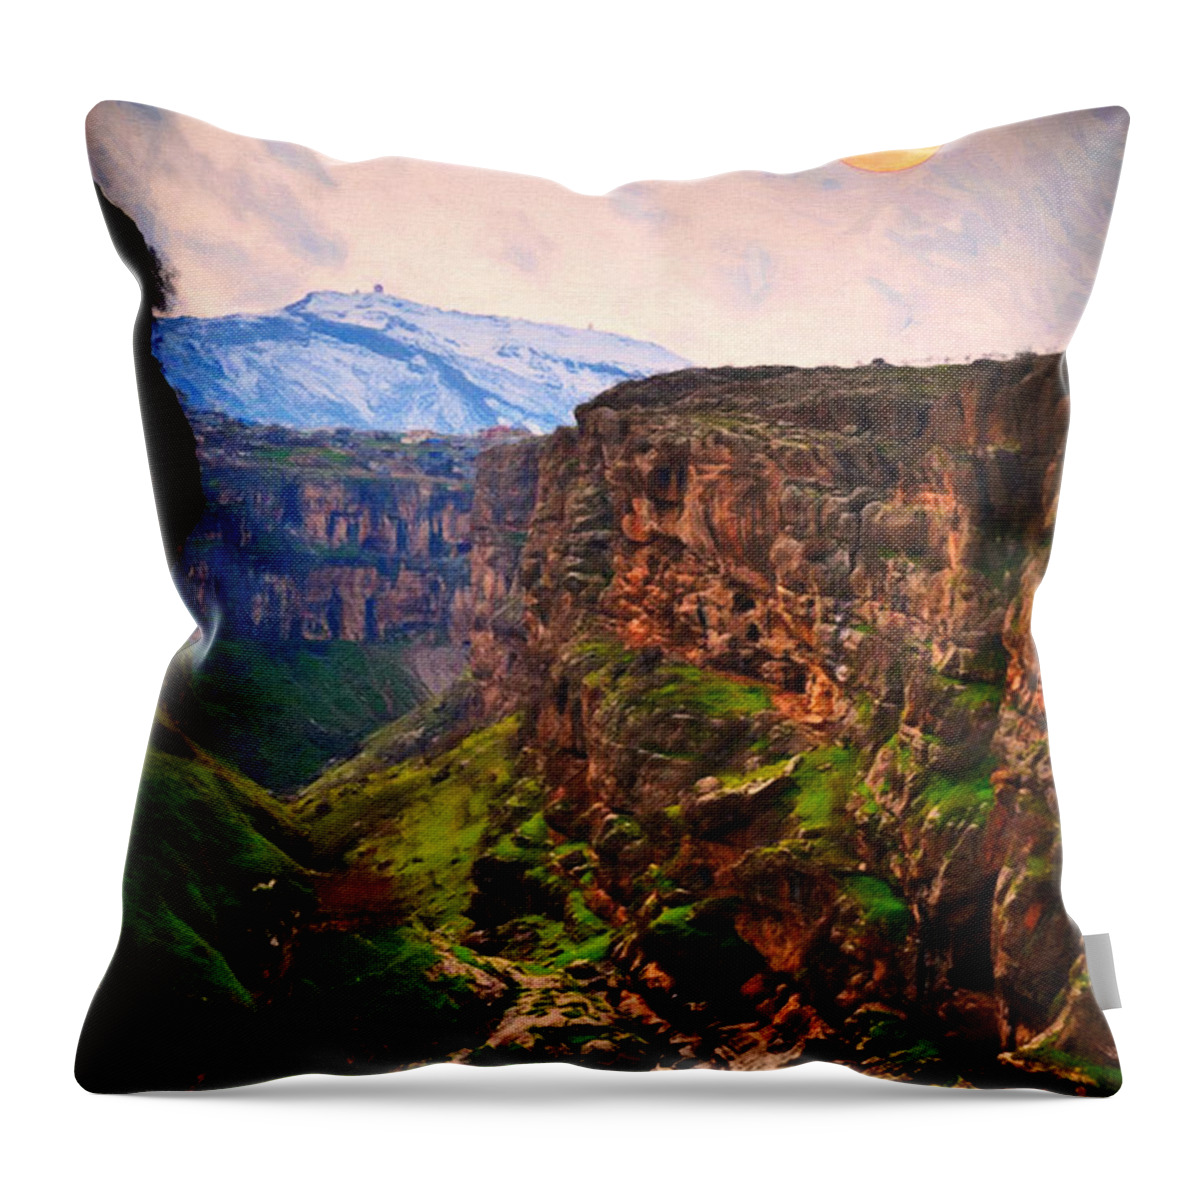 Kurdish Life In Kurdistan Throw Pillow featuring the painting Kurdish Life in Kurdistan by MotionAge Designs